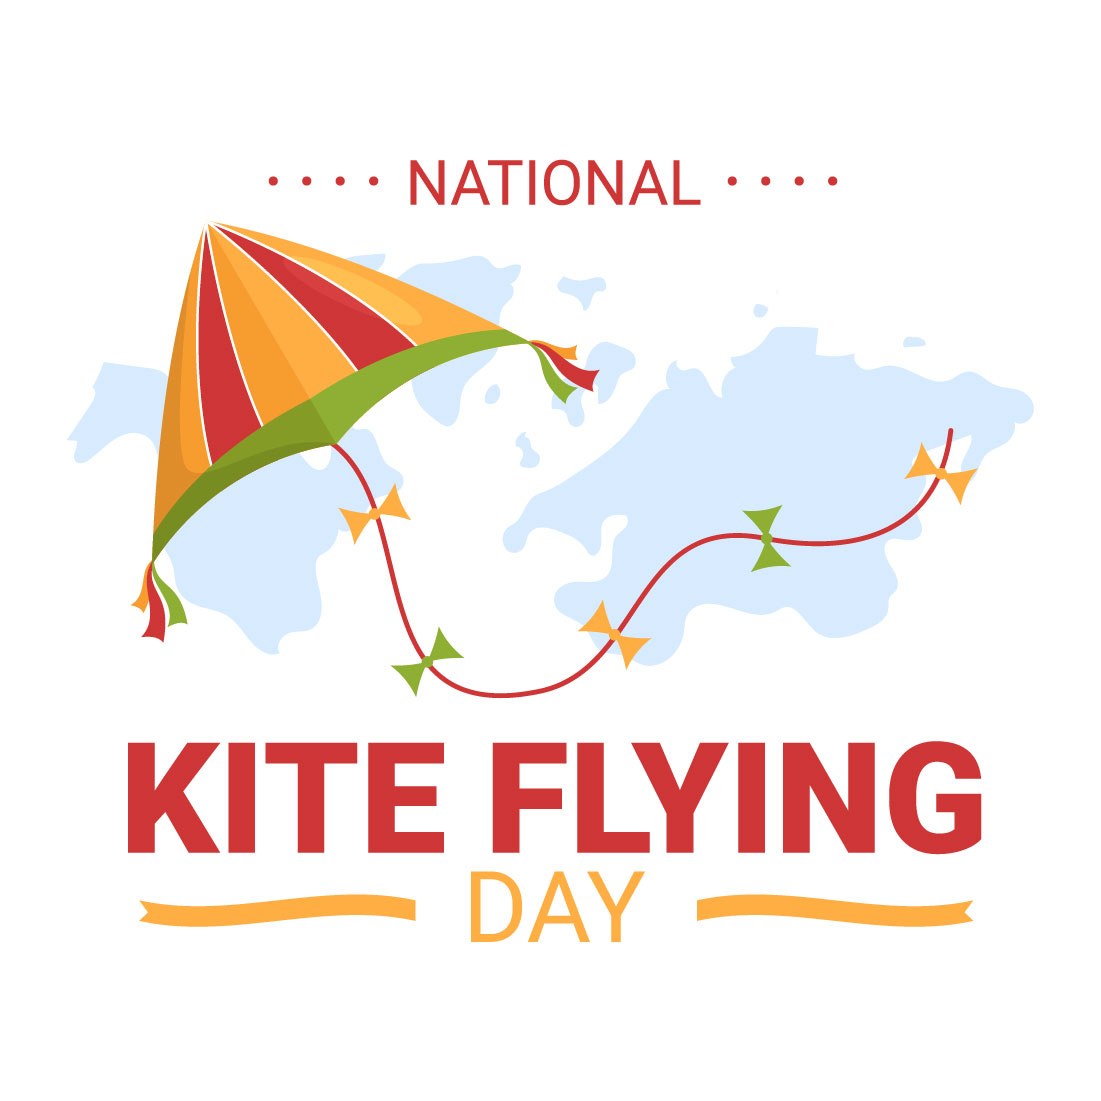 Cartoon Kite Flying Day Design Illustration cover image.